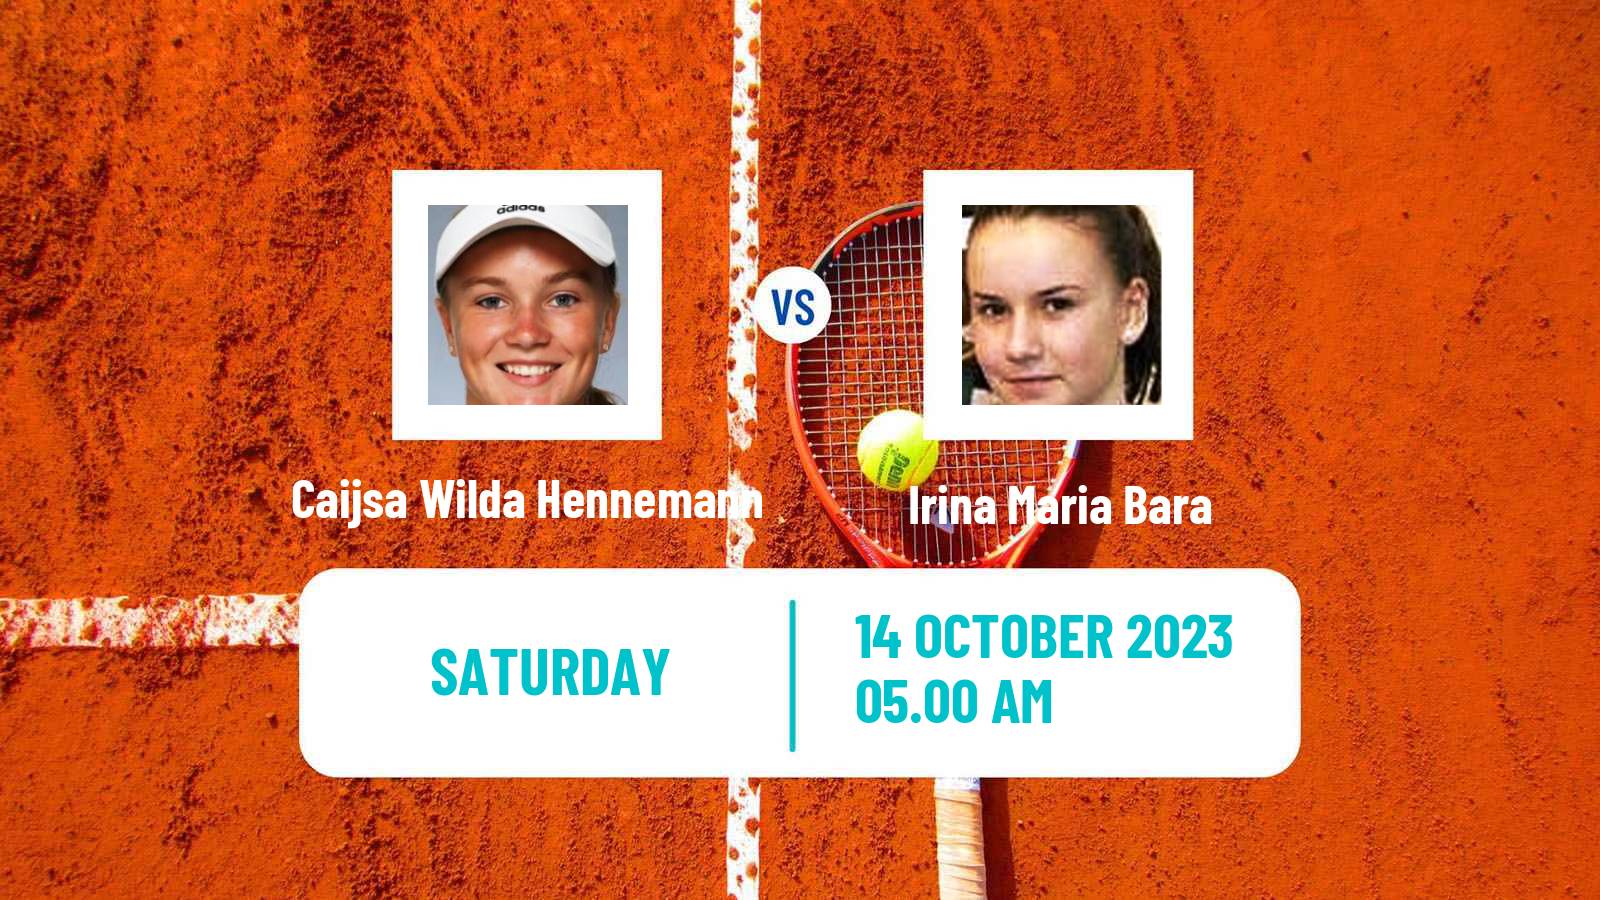 Tennis ITF W25 Santa Margherita Di Pula 9 Women Caijsa Wilda Hennemann - Irina Maria Bara